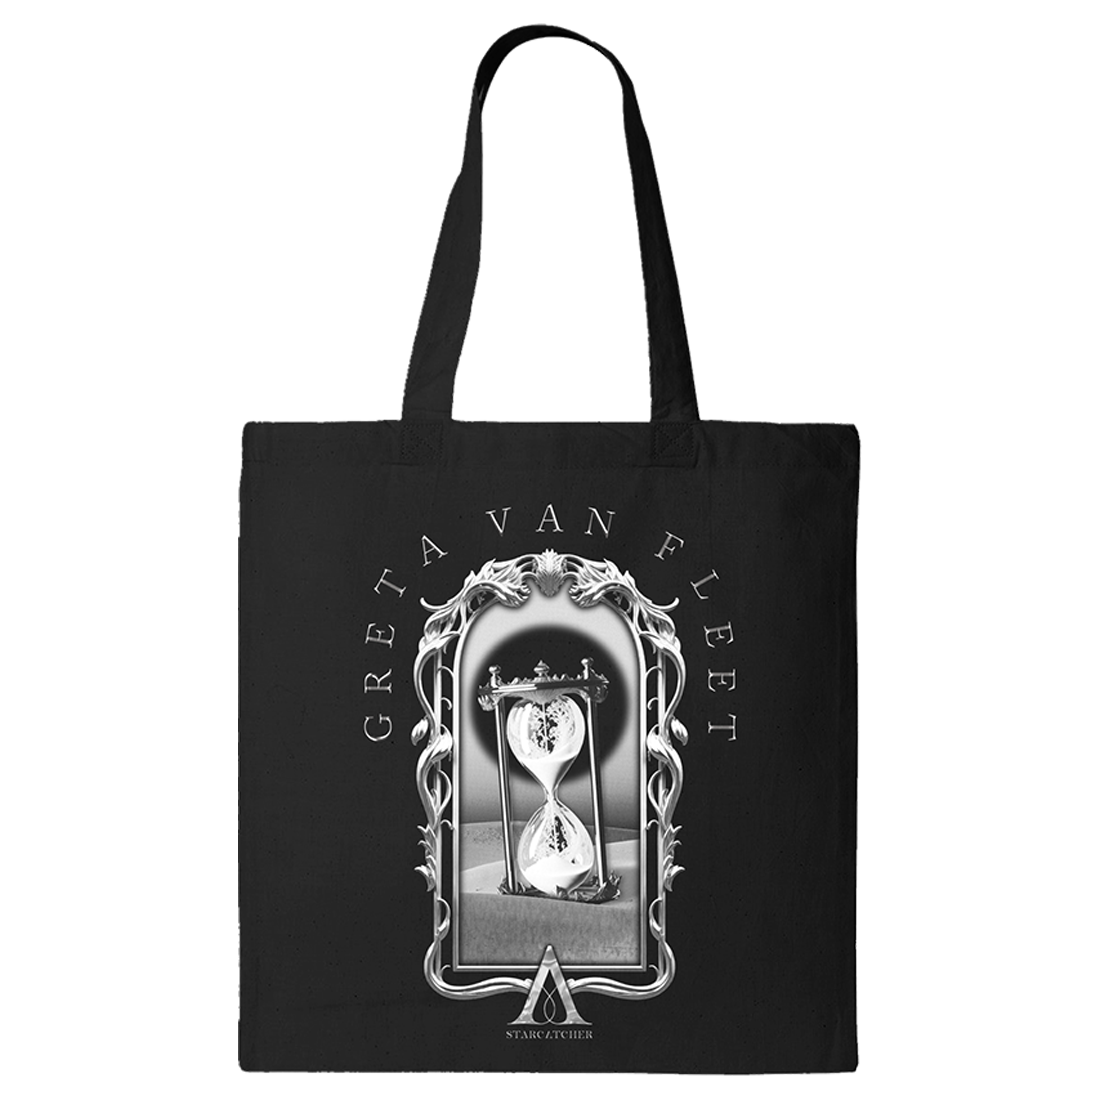 Greta Van Fleet - Black Hourglass Tote Bag